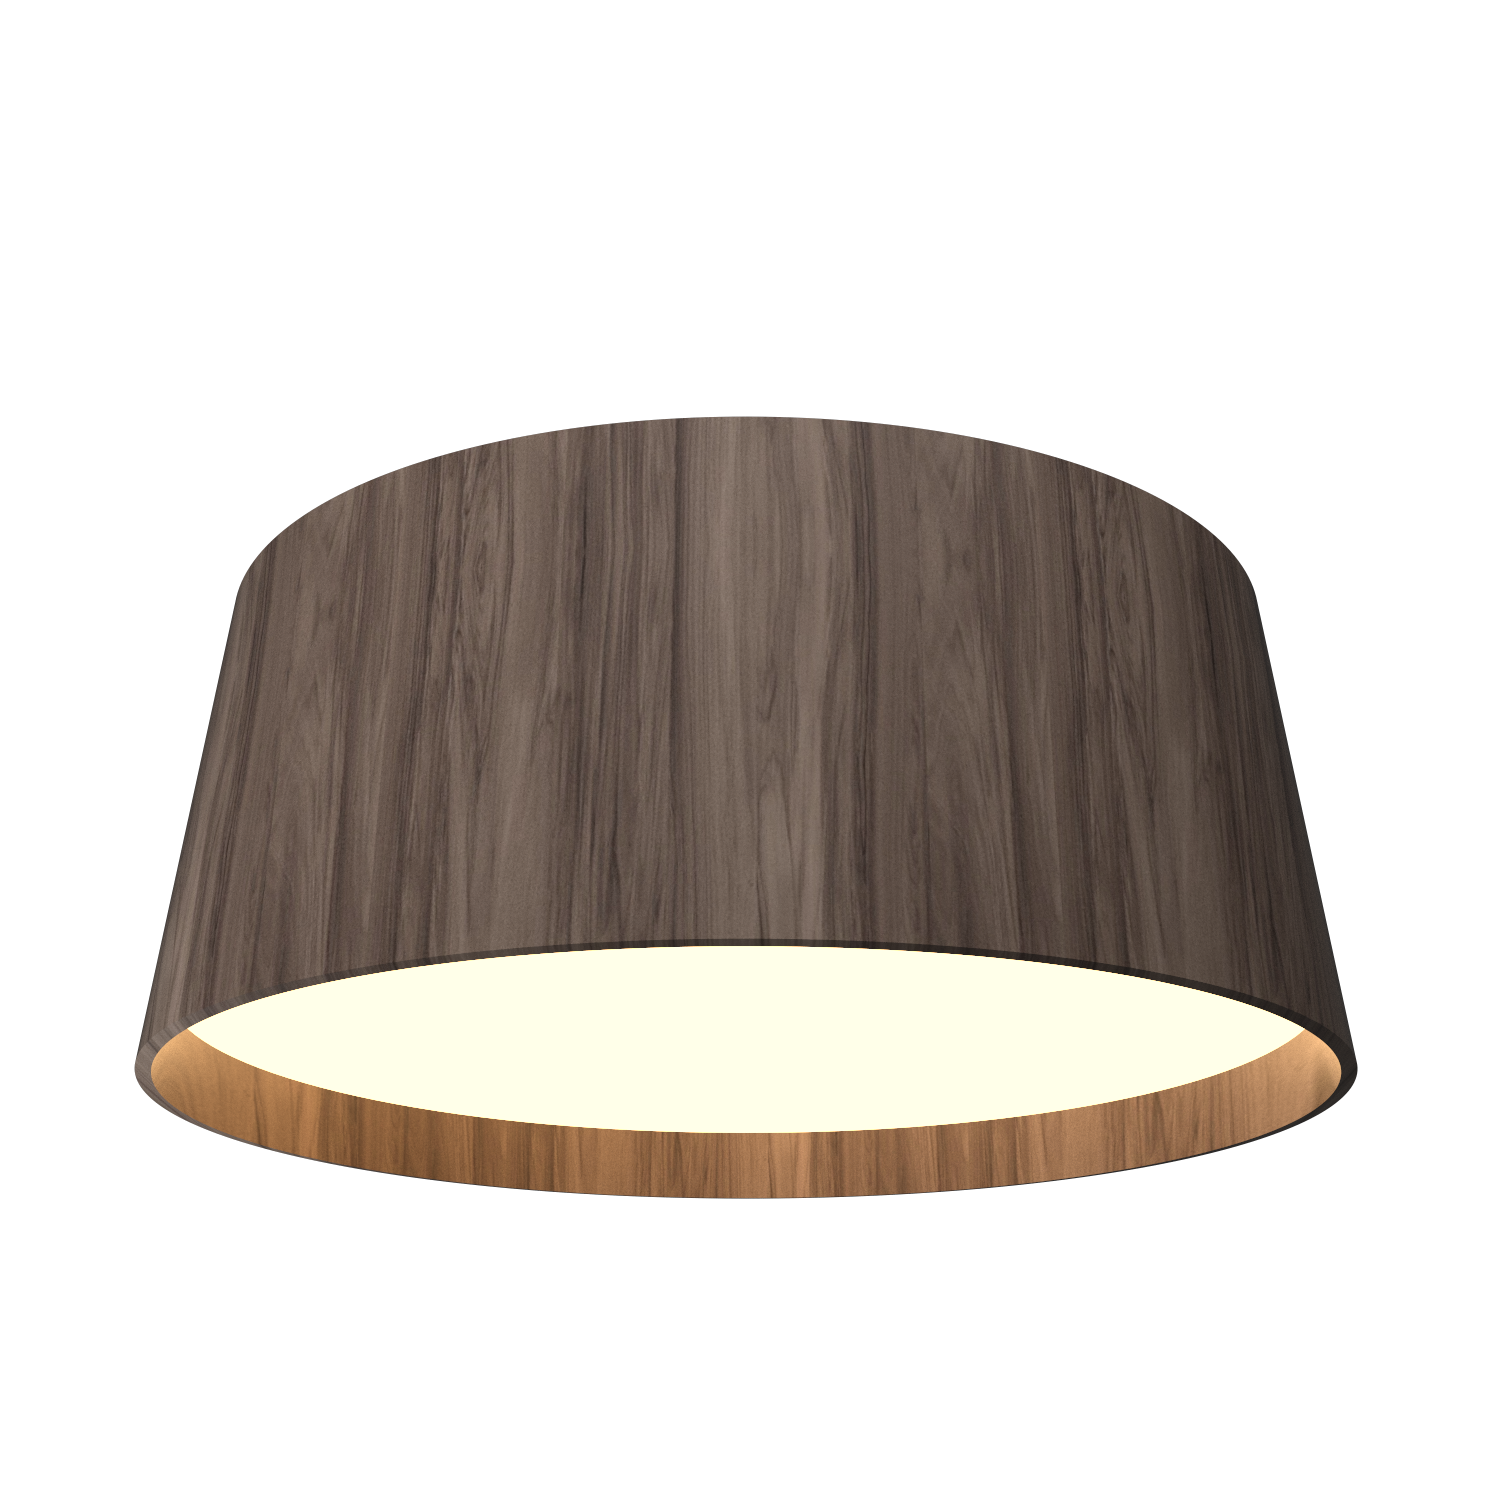 Ceiling Lamp Accord Cônico 5098 - Cônica Line Accord Lighting | 18. American Walnut